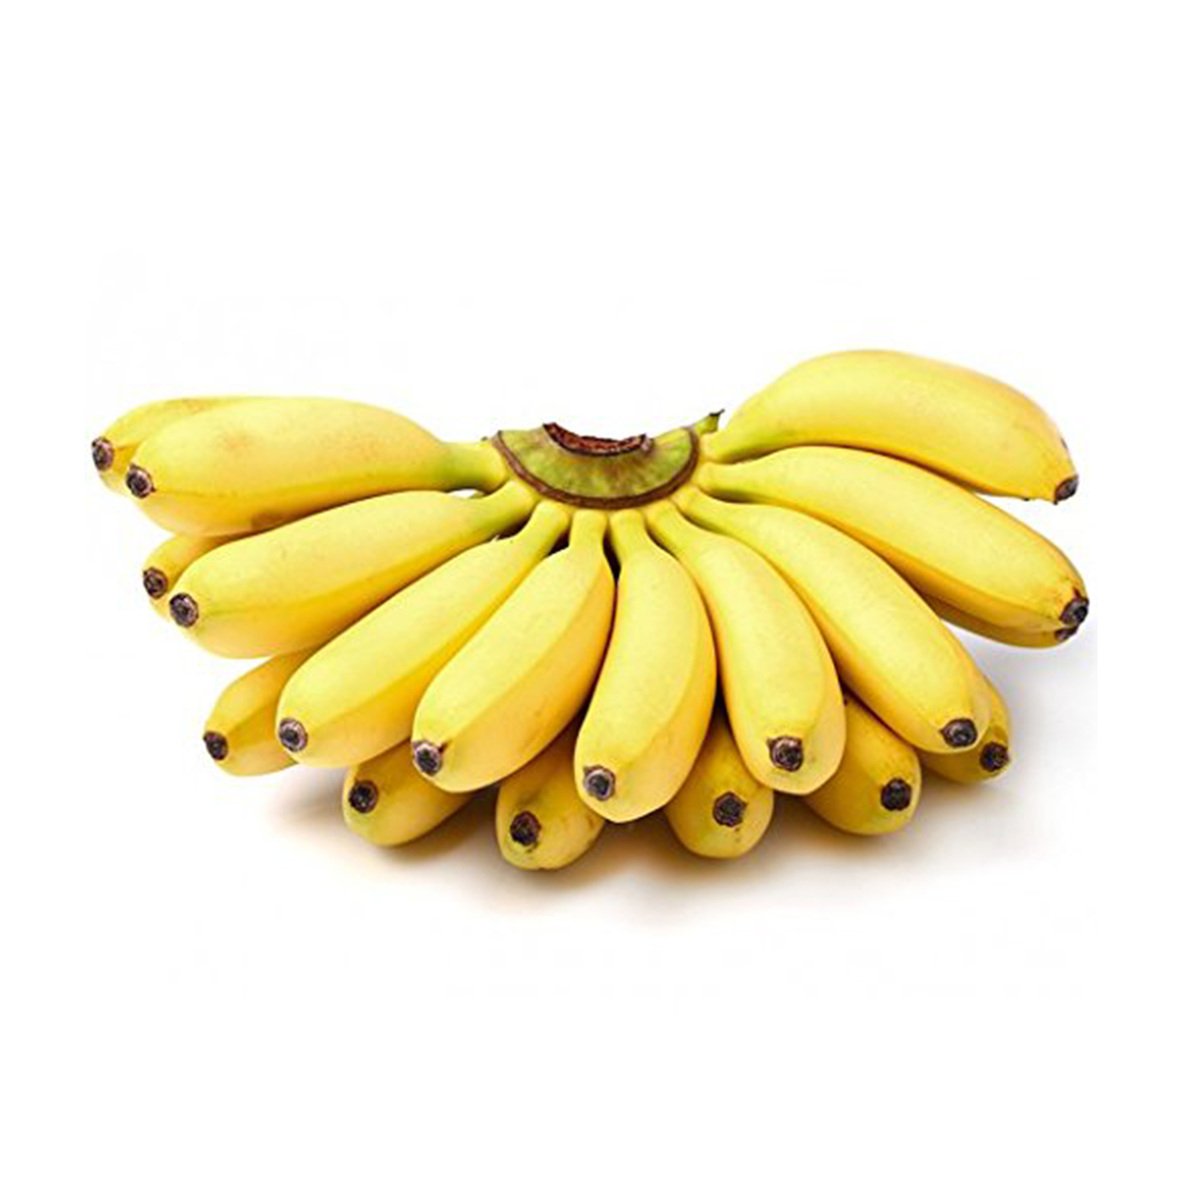 Banana Poovan Sri Lanka 500 g